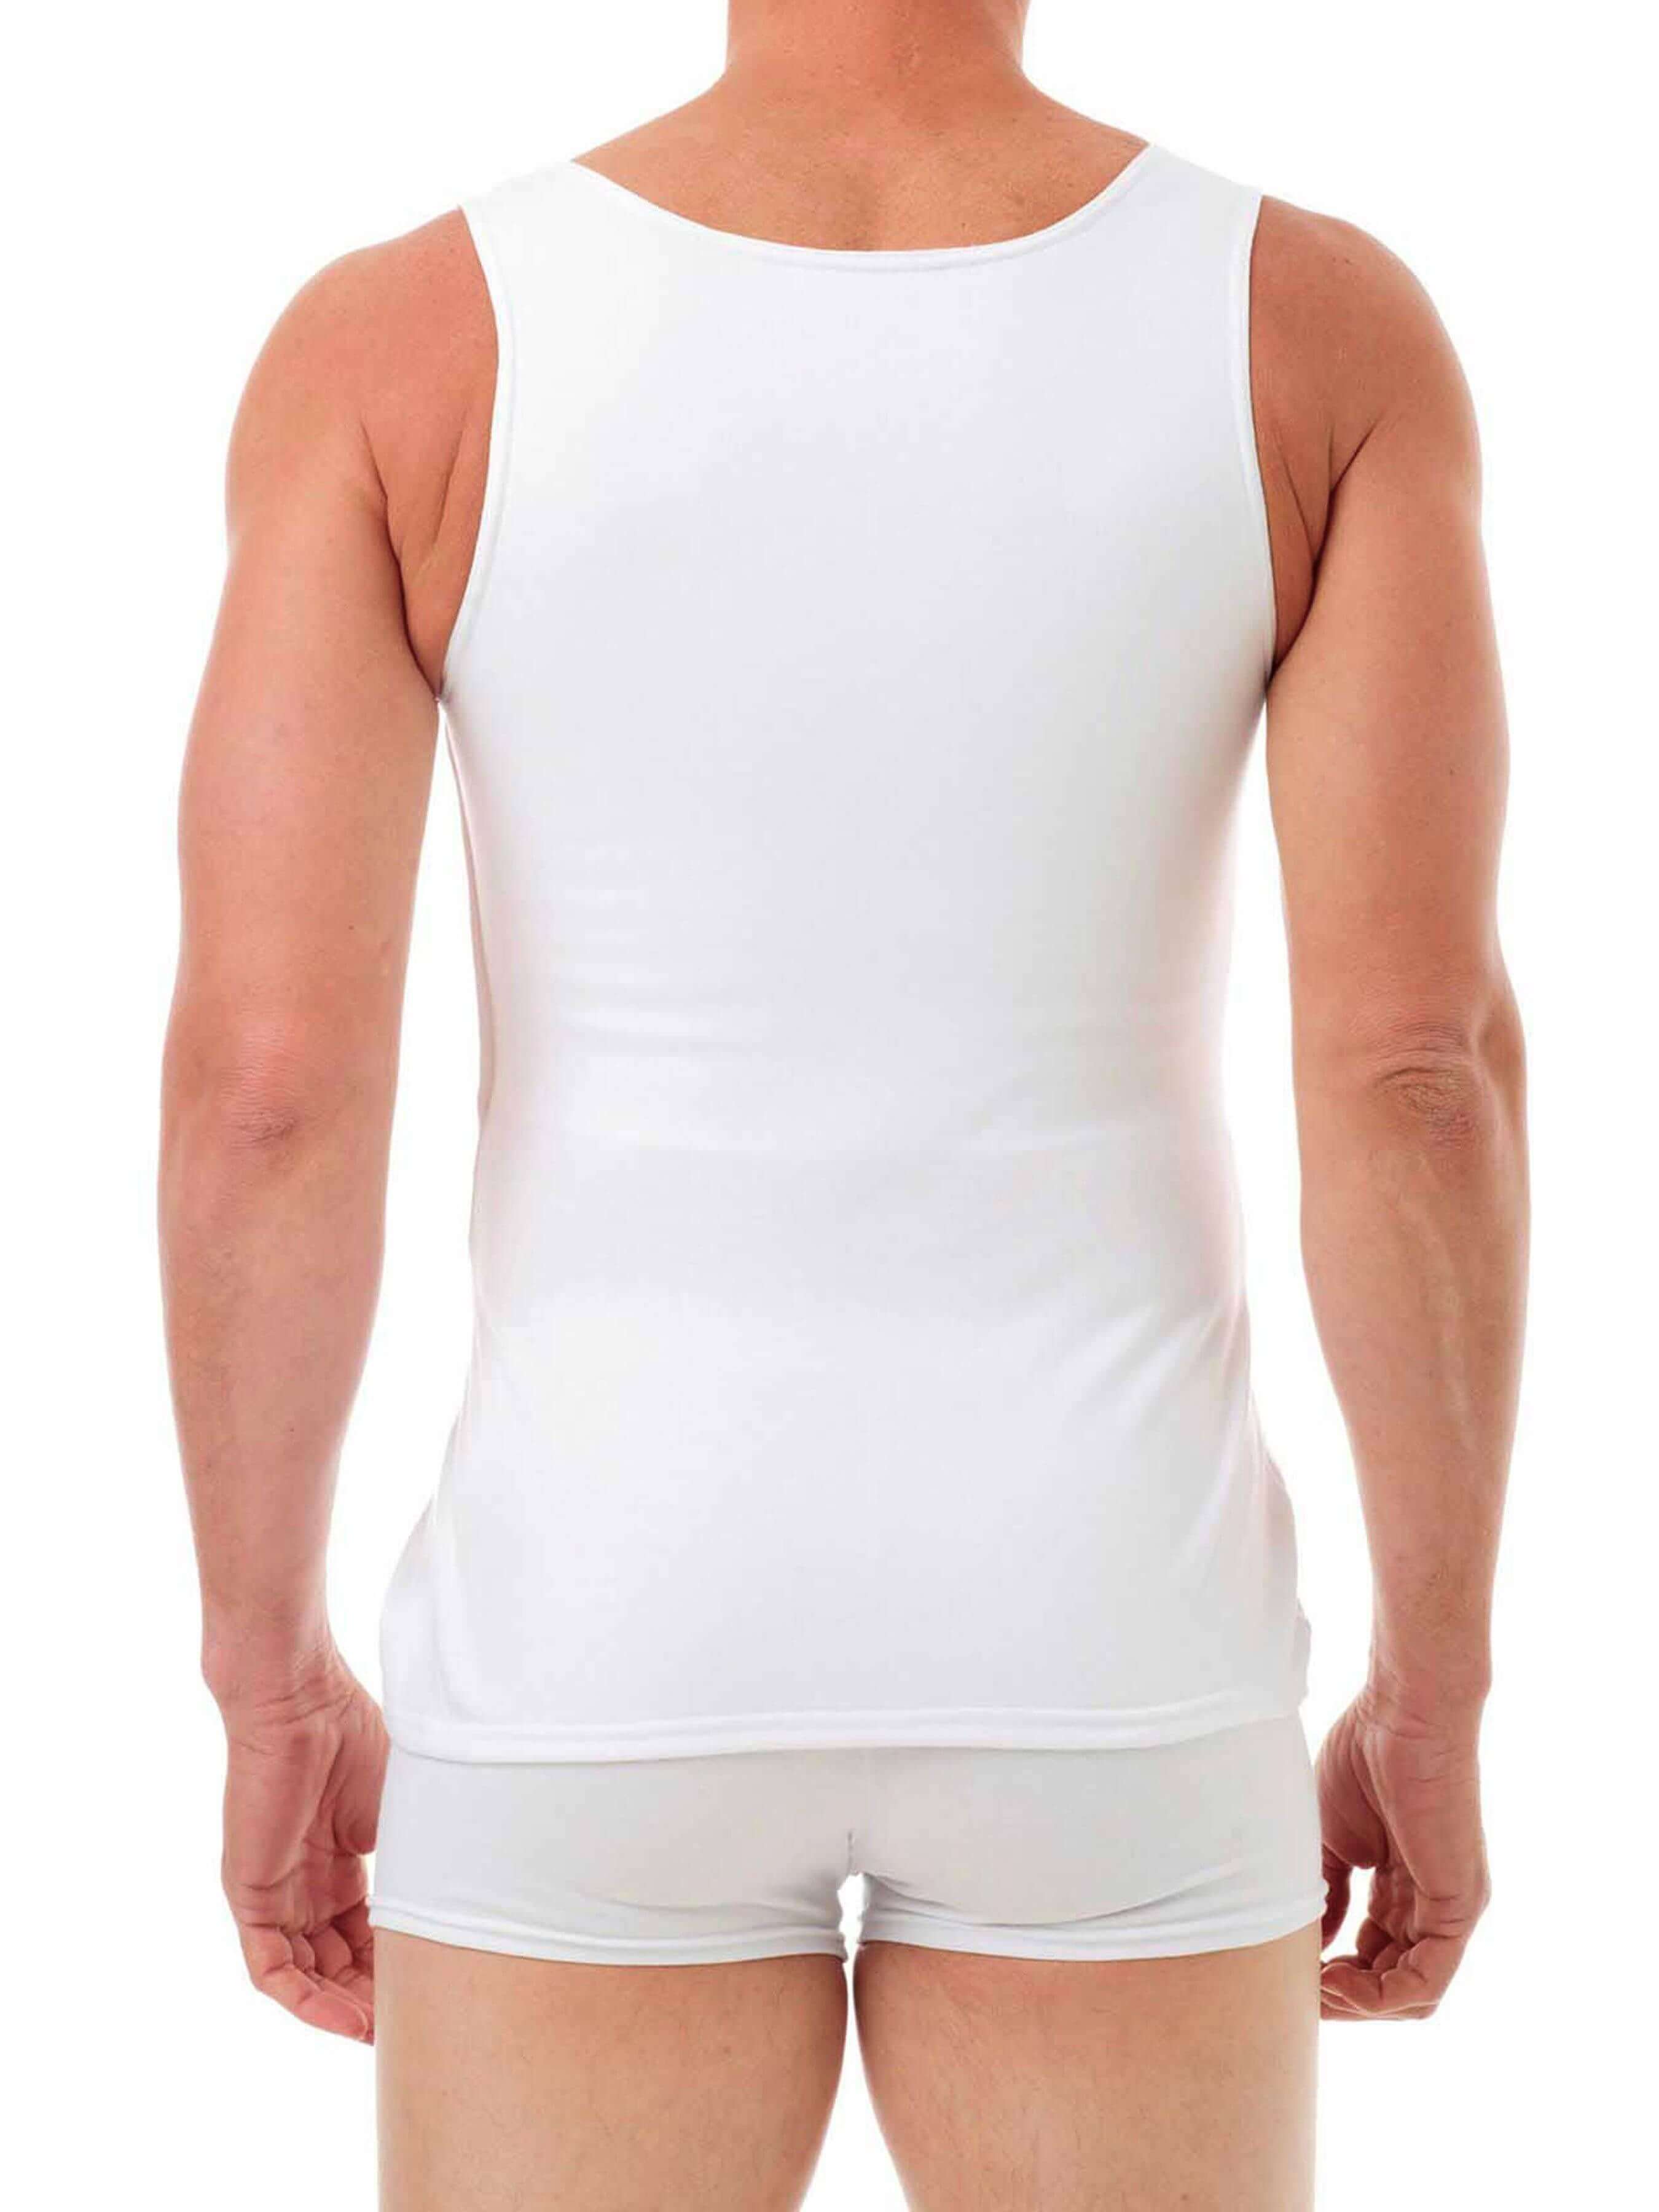 White Compression Shirt, Chest Compression Binder